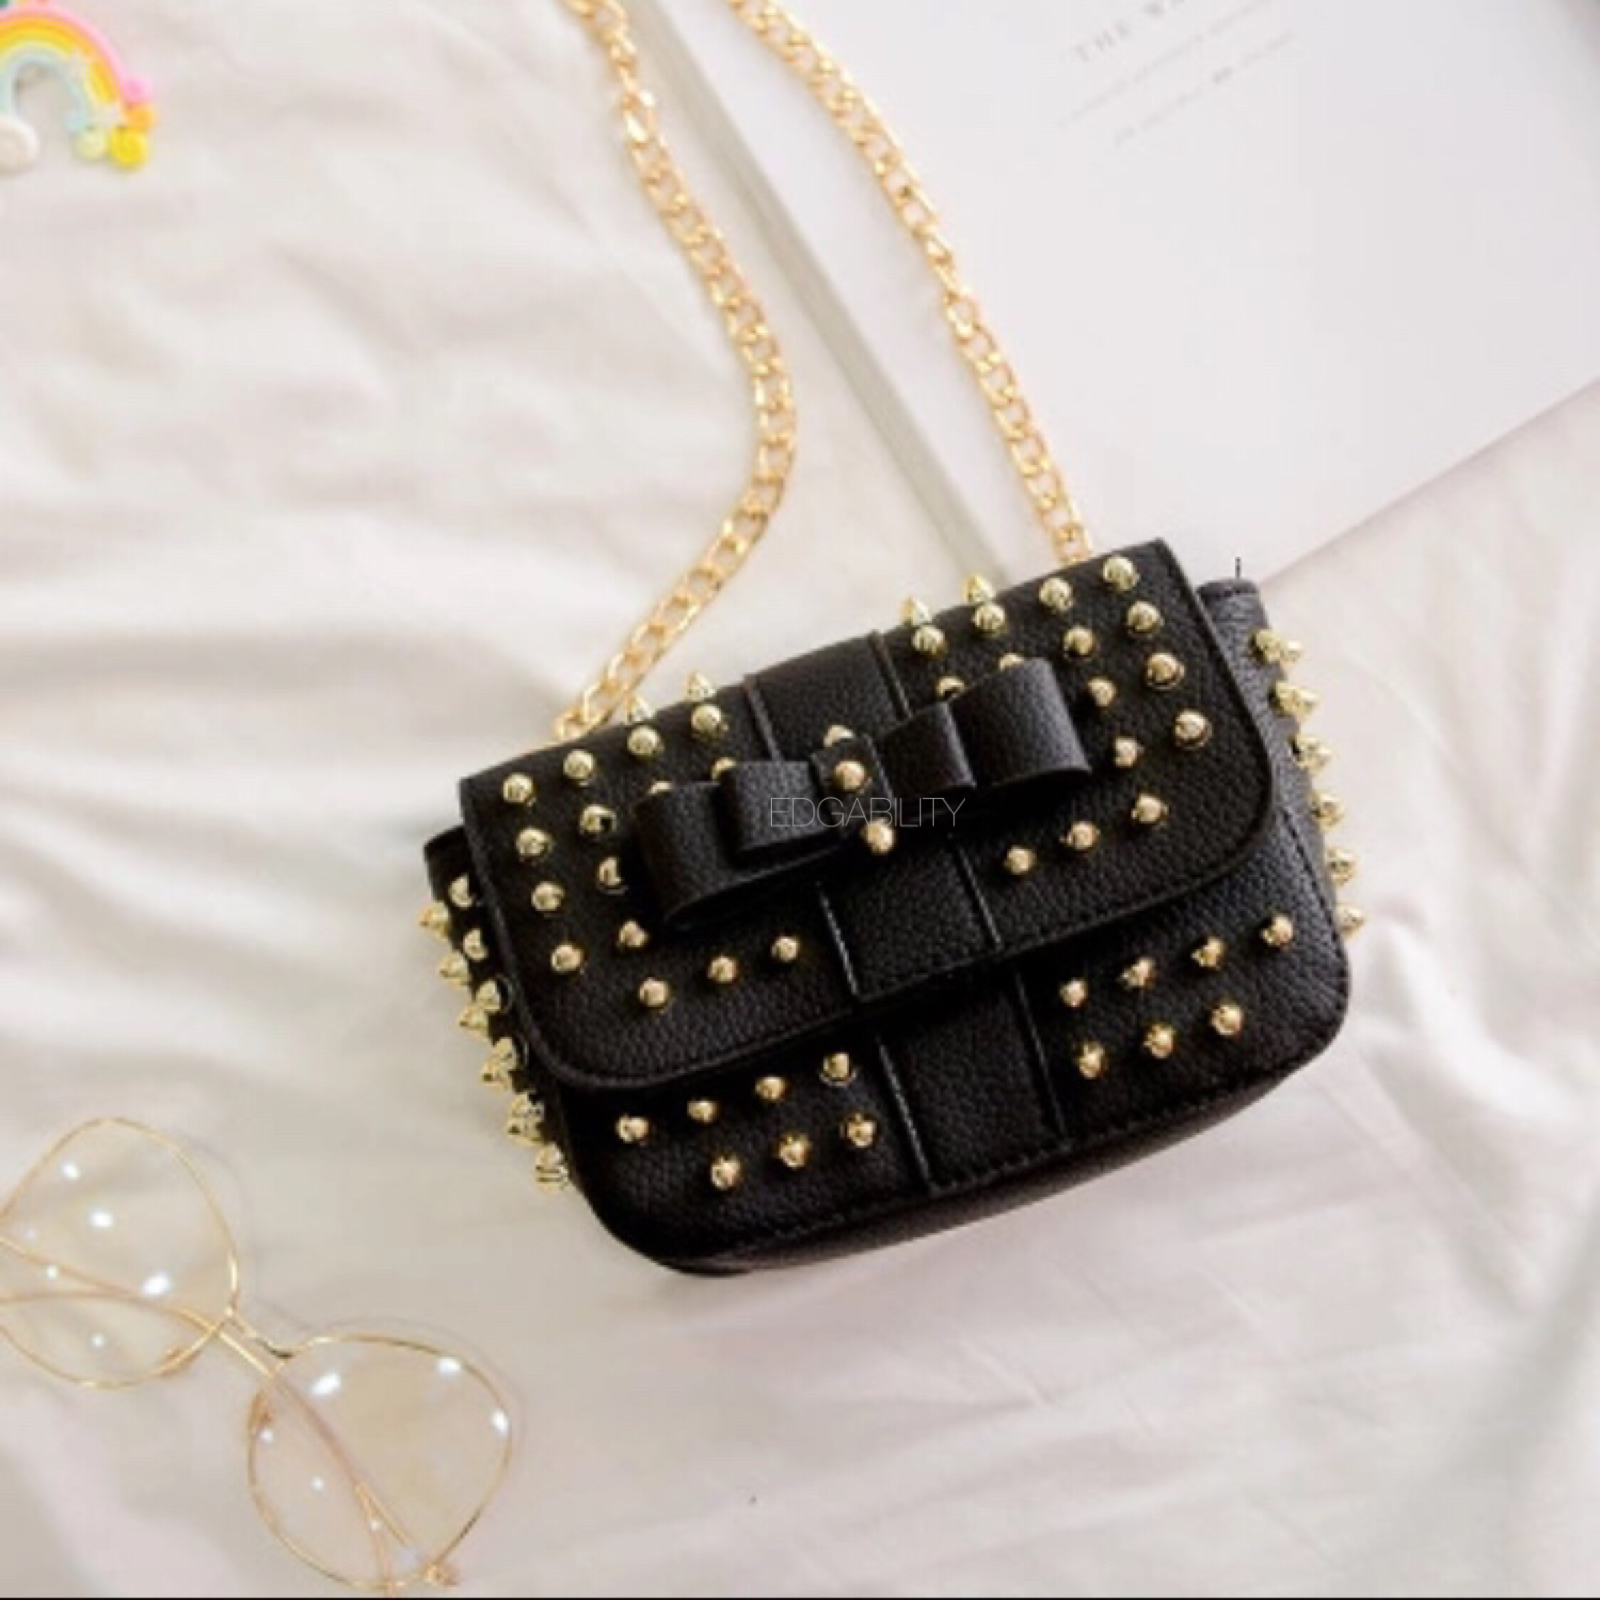 Zara Studded Bowling Bag | Bowling bags, Bags, Studded handbags